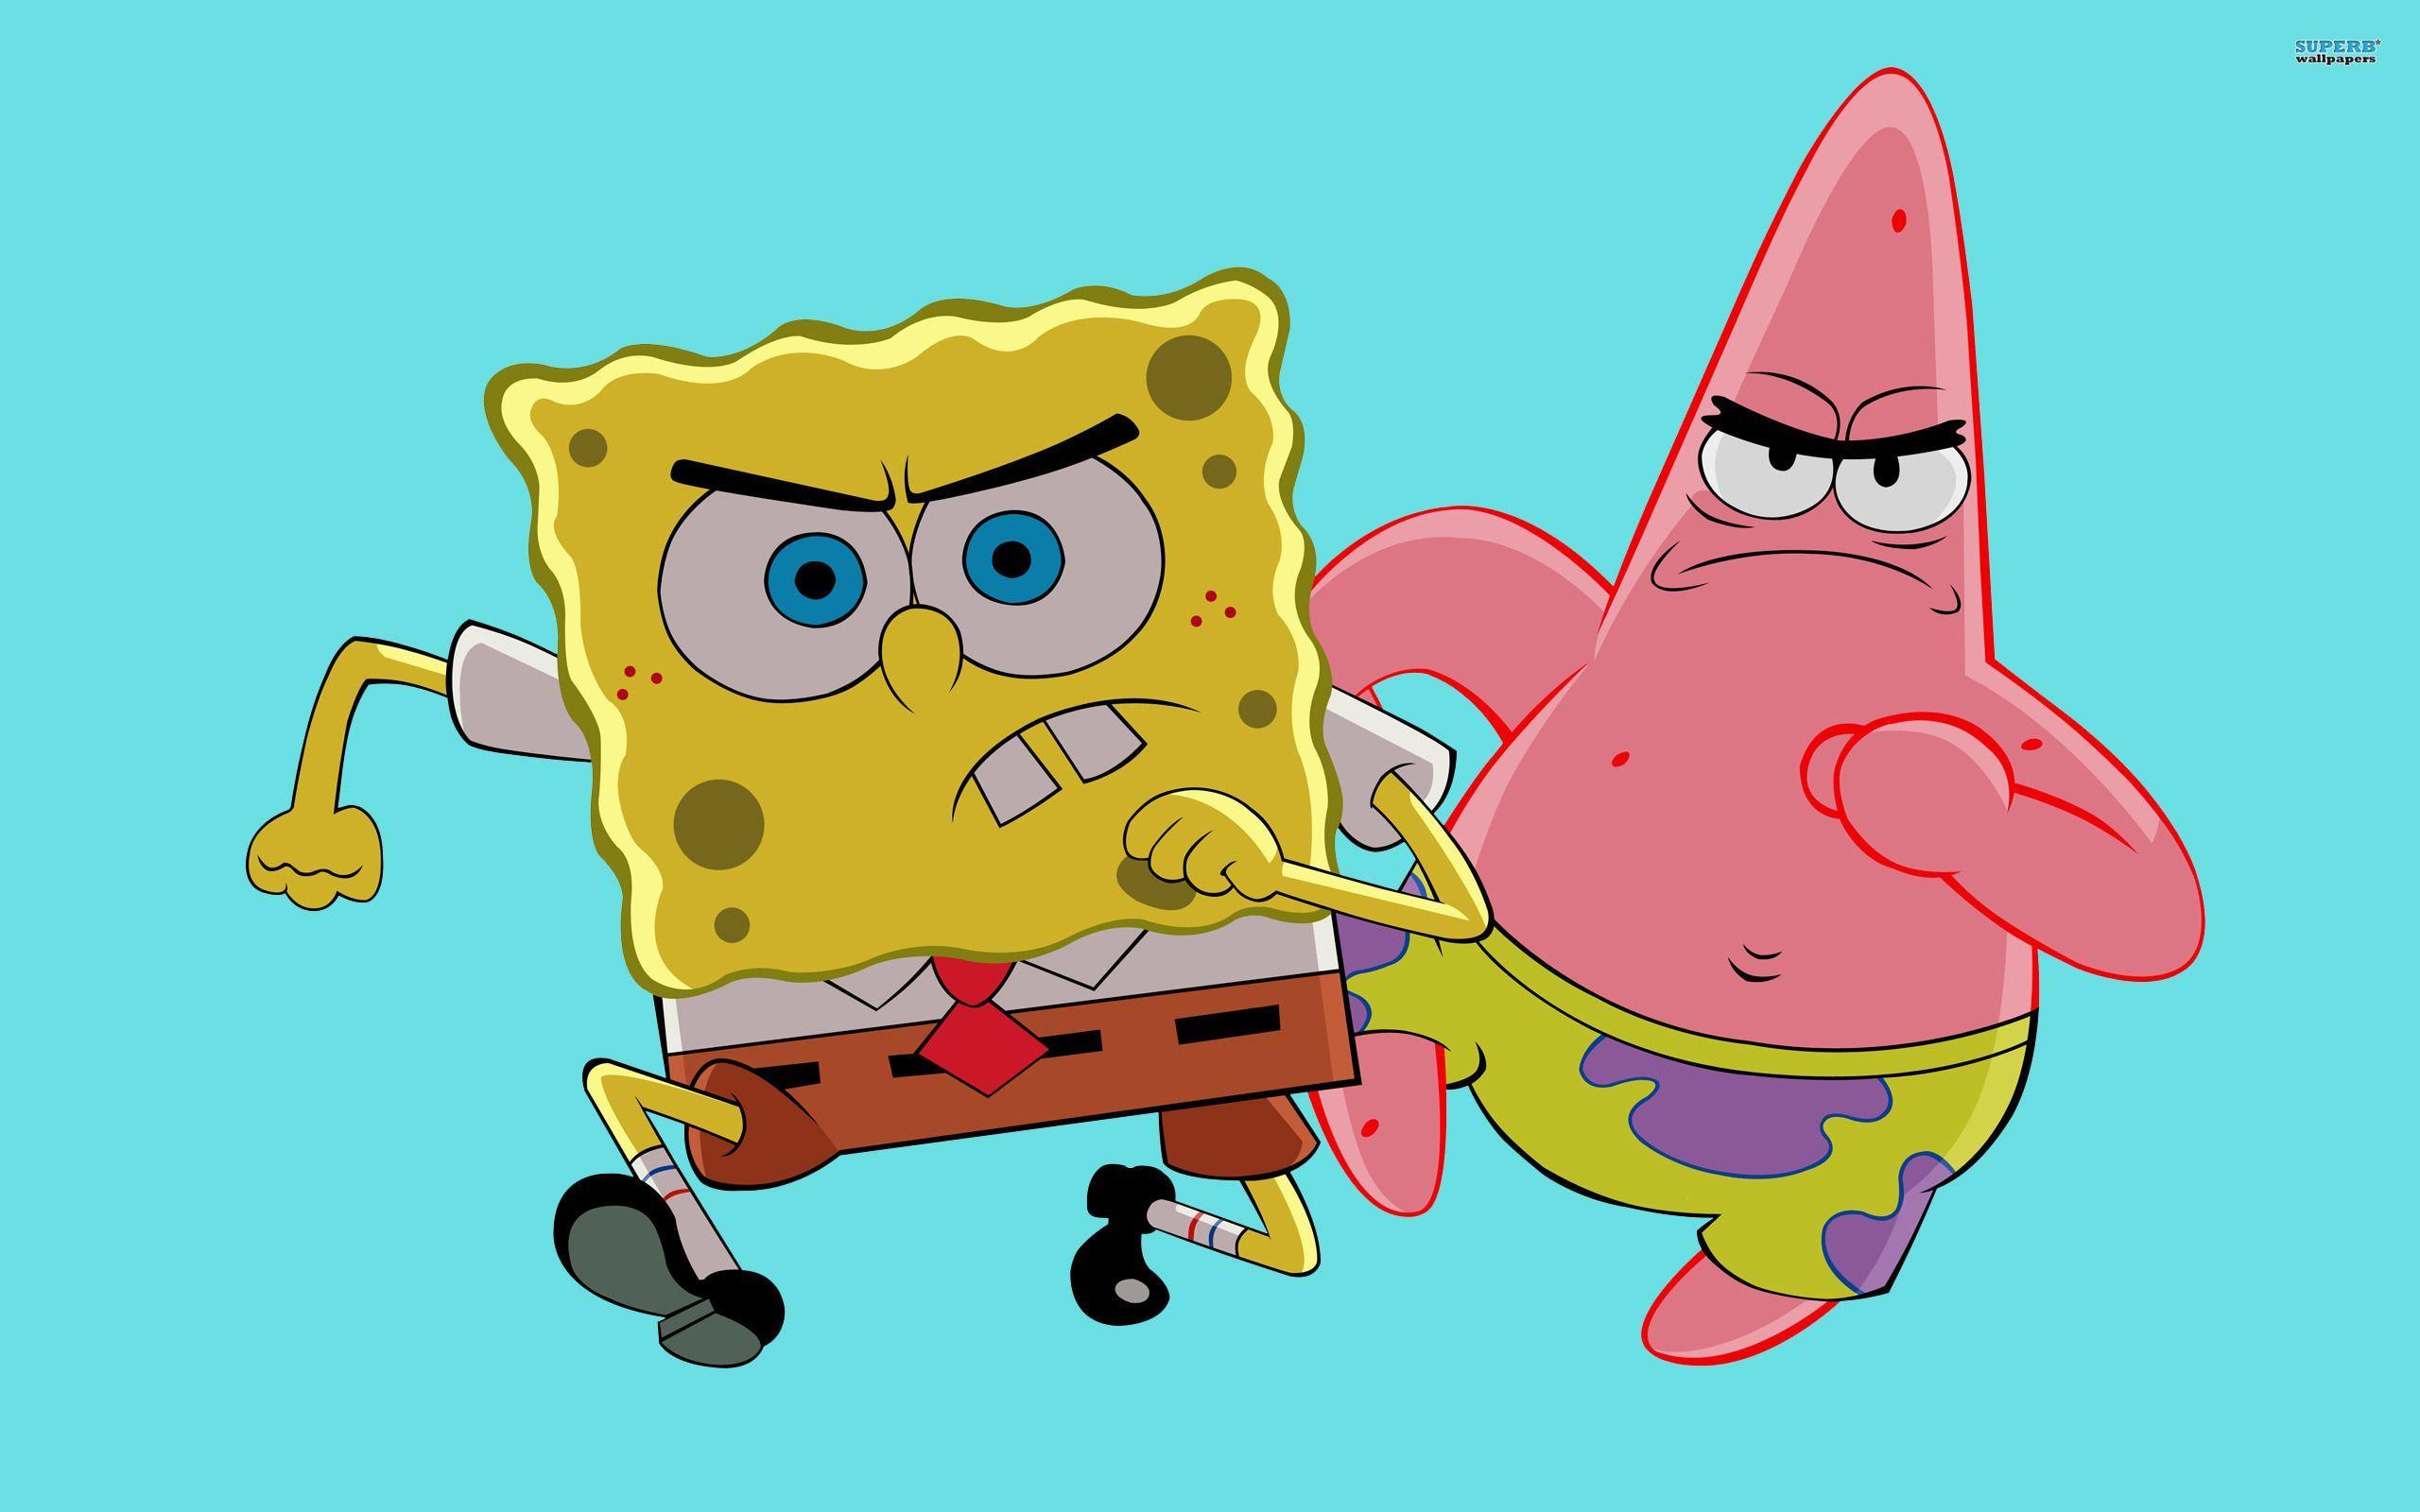 SpongeBob and Patrick wallpaper. Friendship is Forever